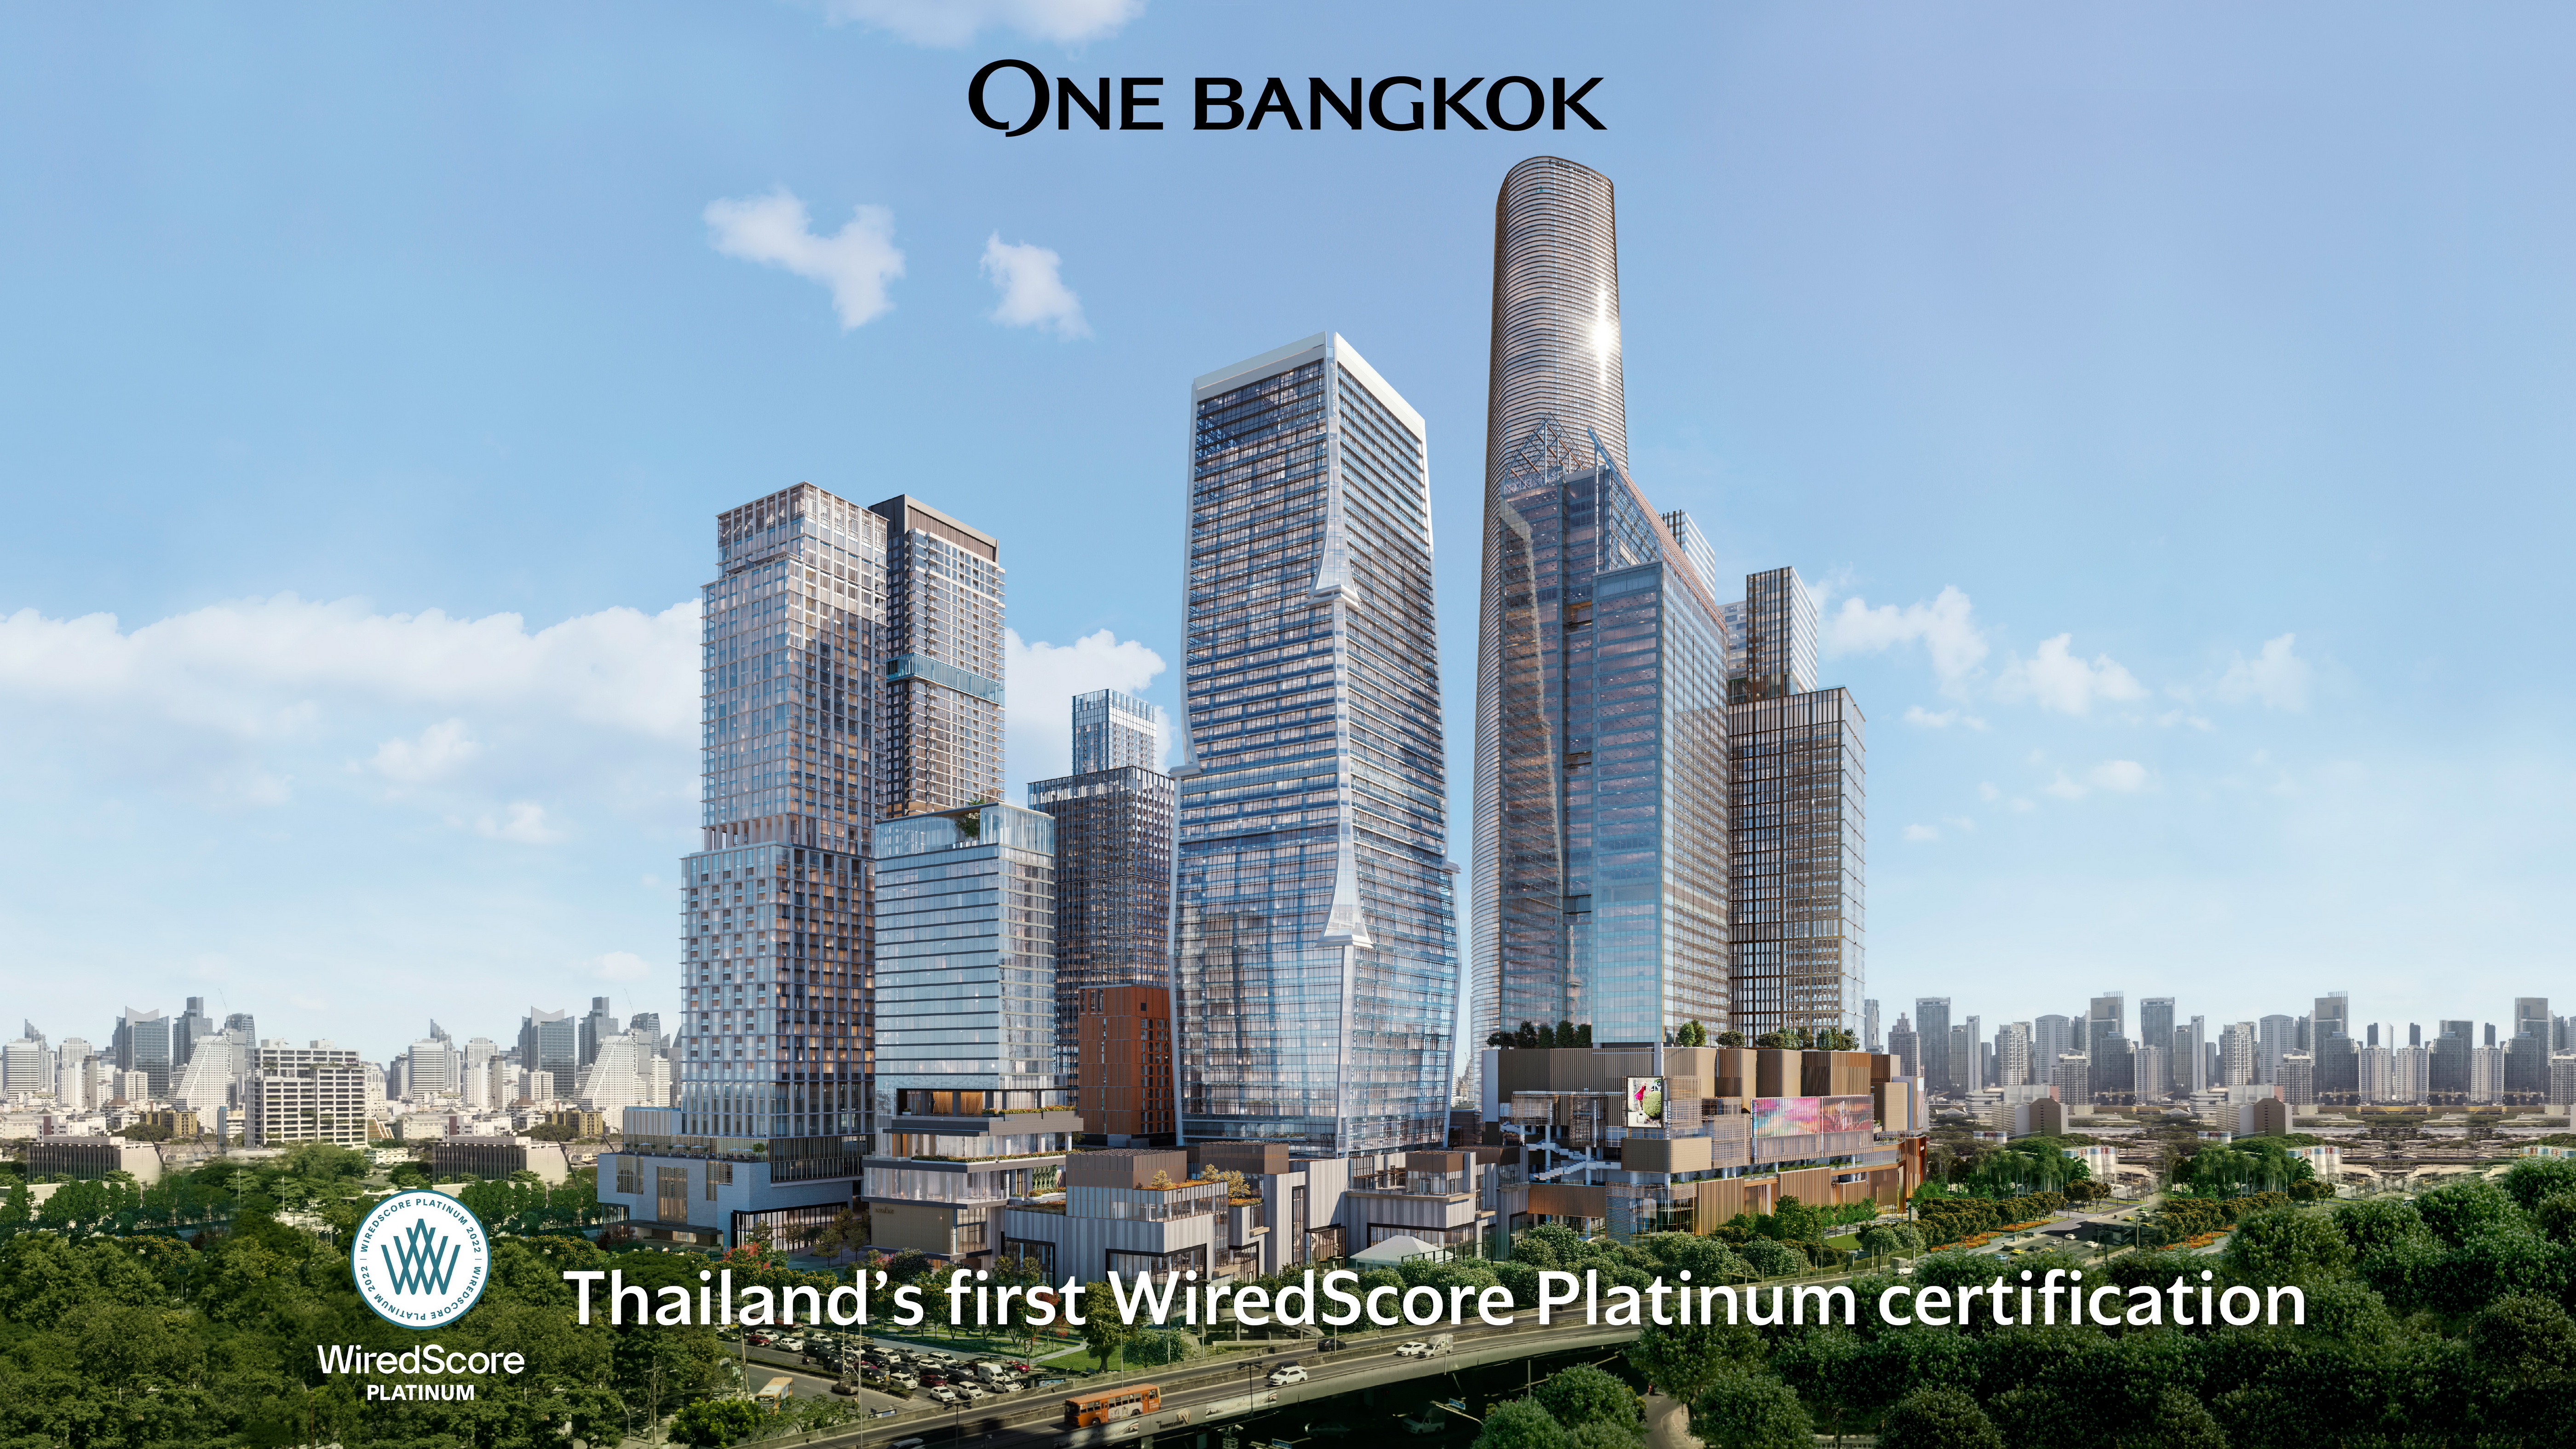 One Bangkok Wiredscore Platinum